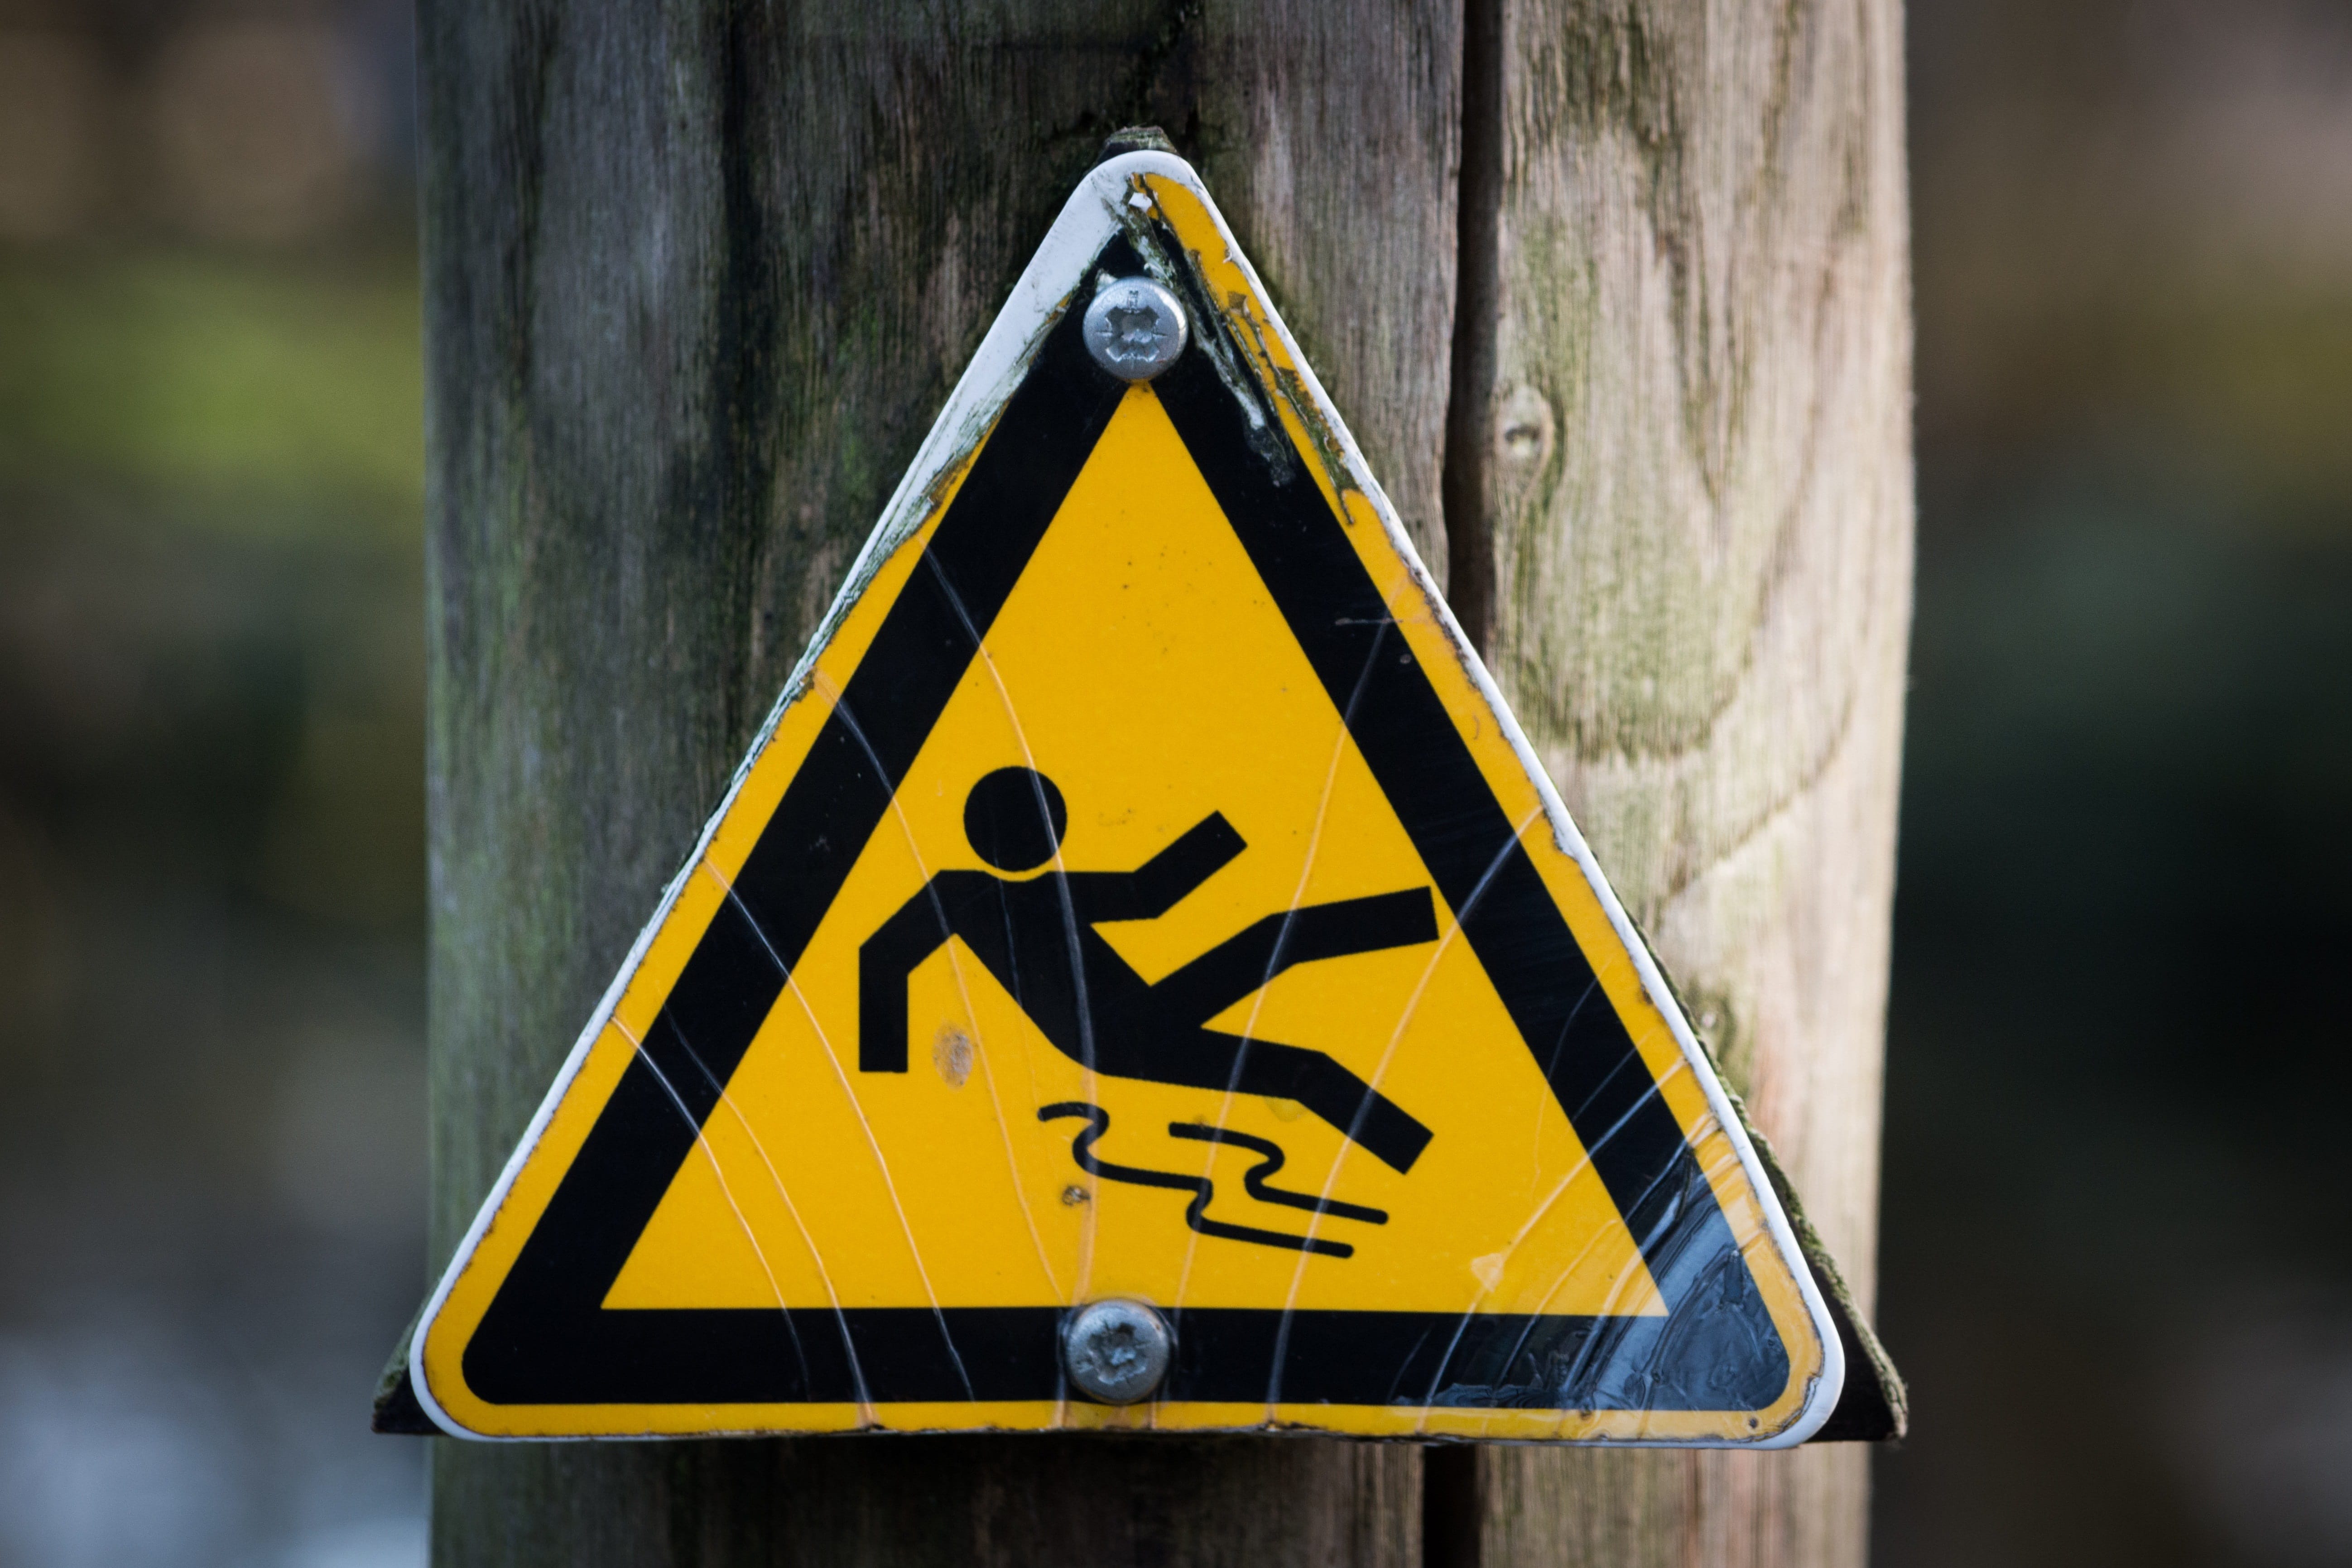 Fall hazard warning sign